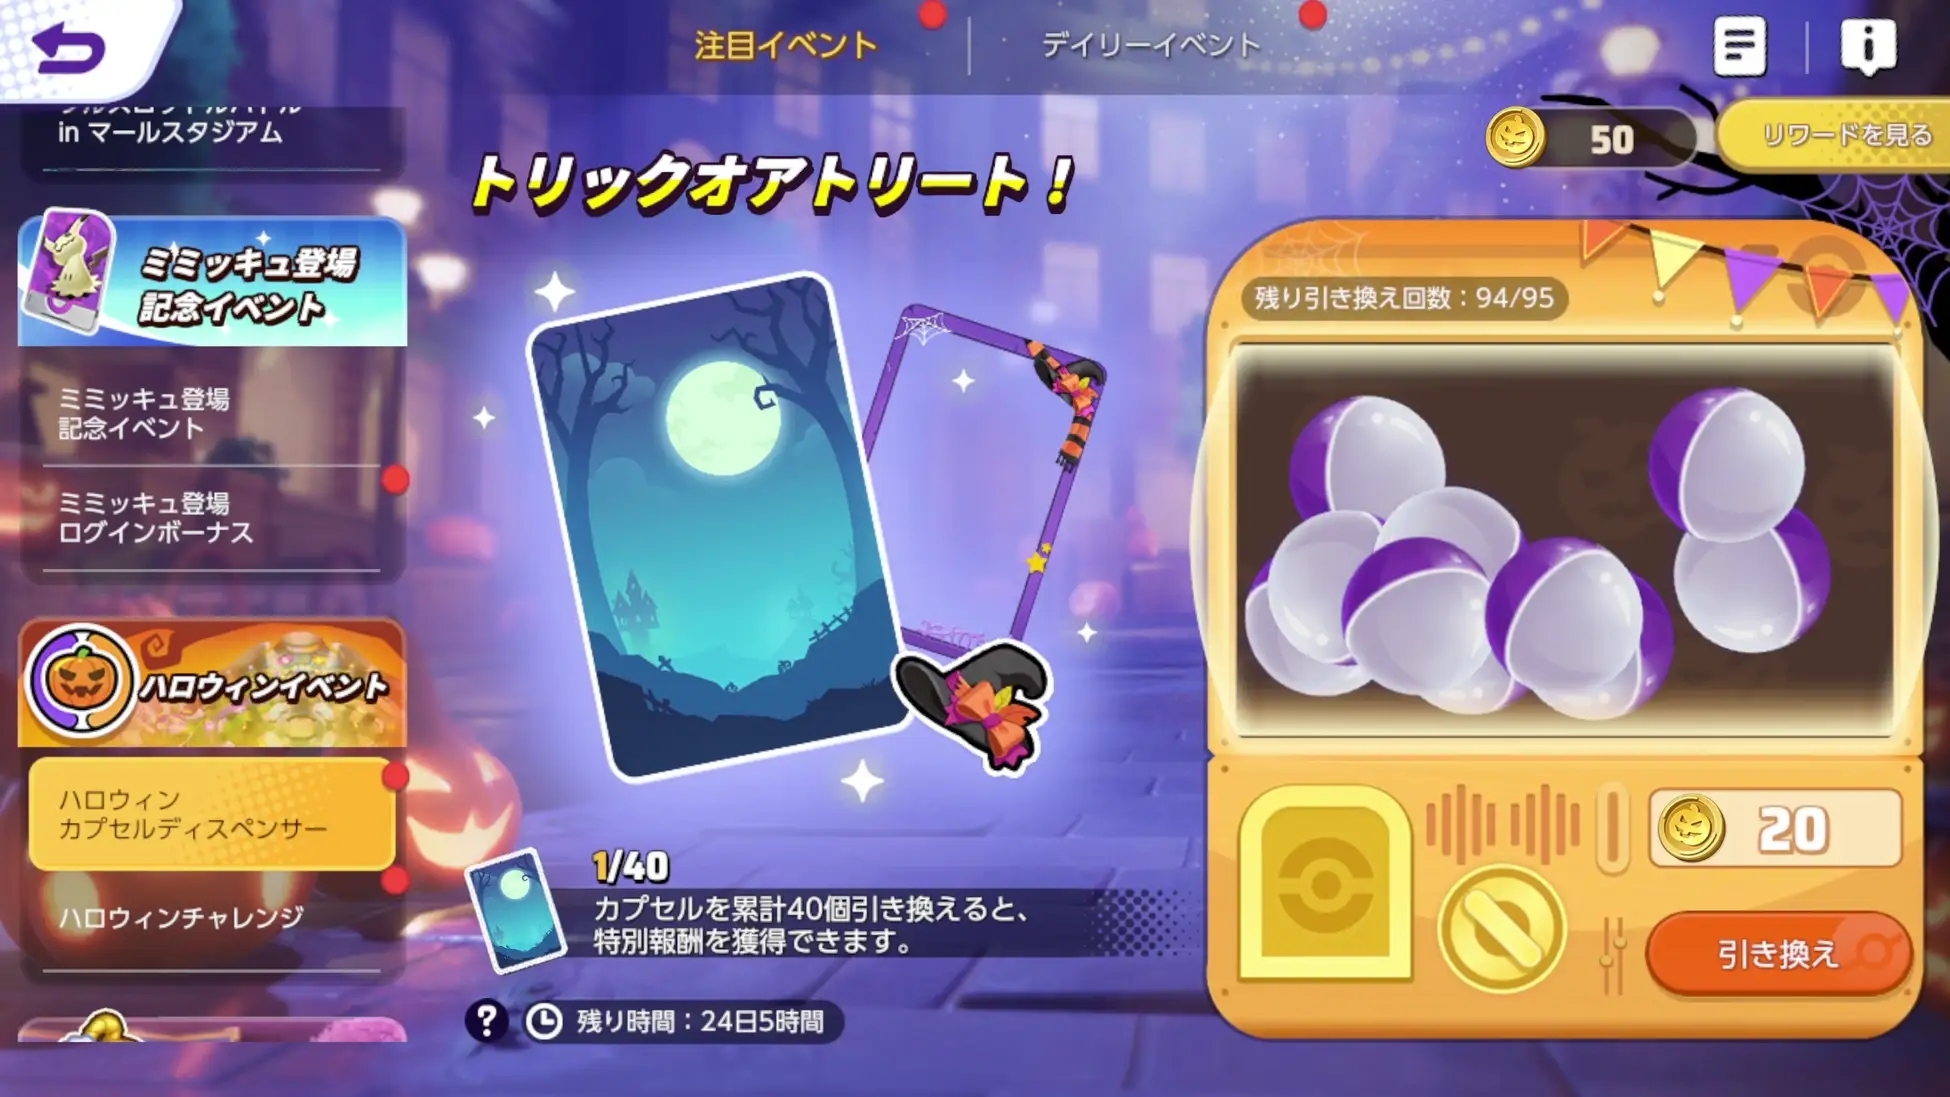 Japanese screenshot of the Halloween Capsule Dispenser, showing various cosmetic rewards